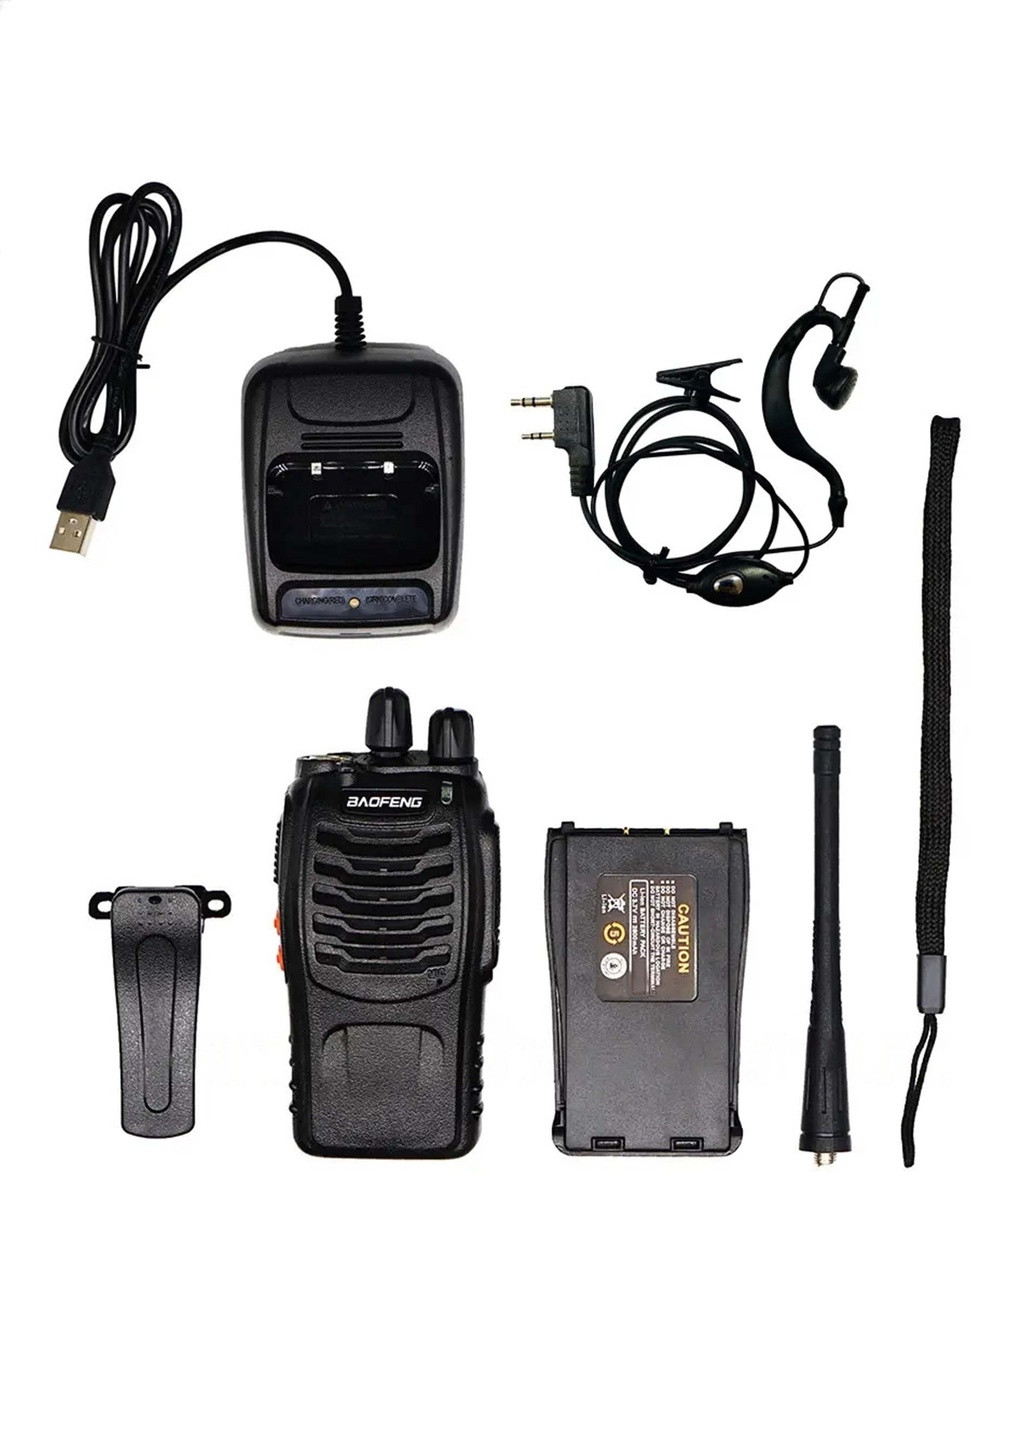 Комплект из 2-х раций с USB зарядкой + полная комплектация, рация BF-888S, радиостанция Baofeng рація (257392101)